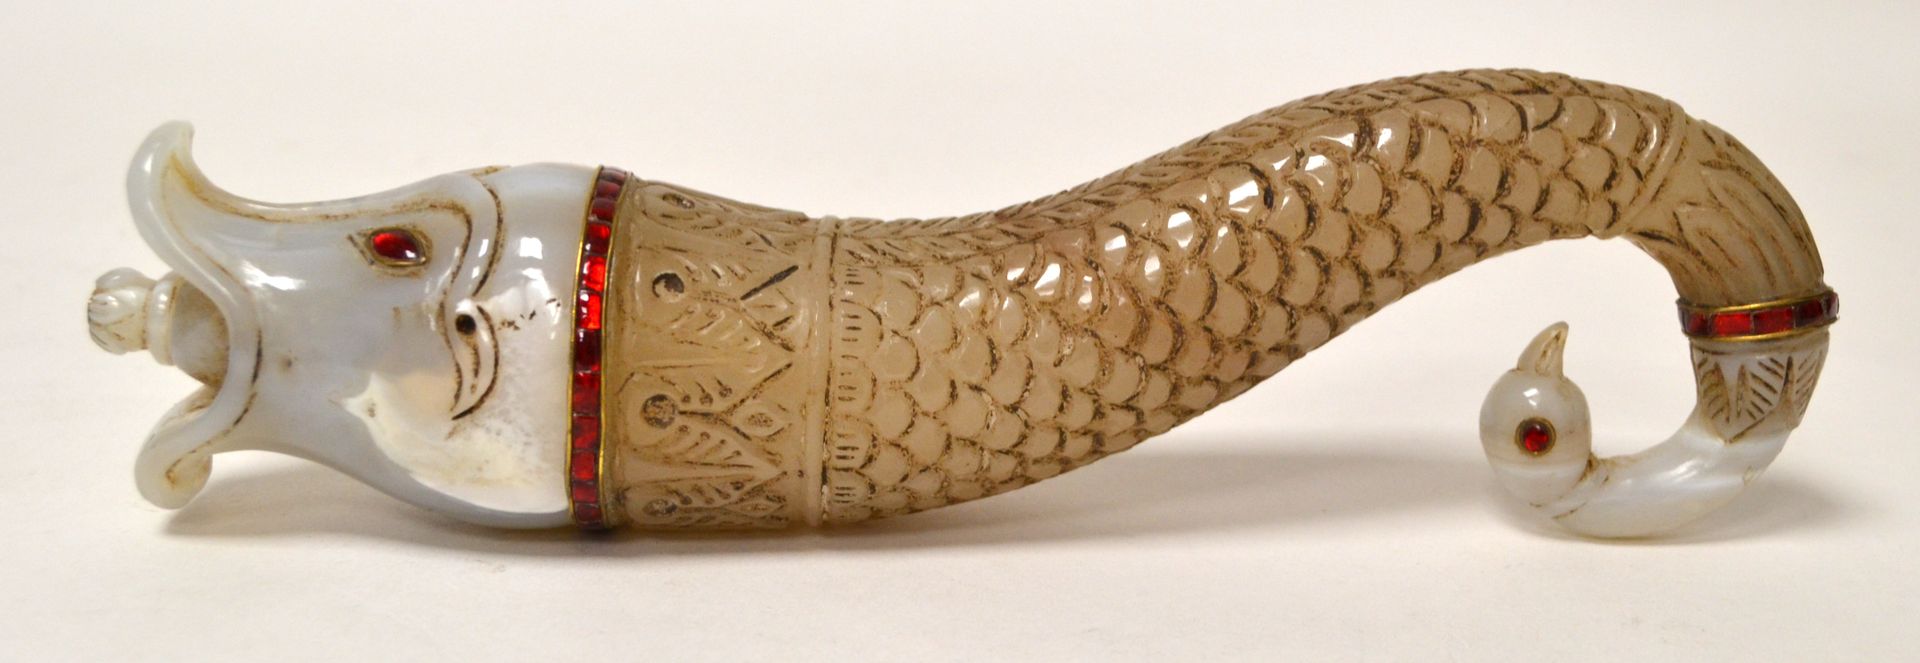 Null 一件用各种色调的玛瑙雕刻成水生动物造型的变形陶罐，头部为马卡拉，尾部为鸟头。壶身雕刻有鳞片和掌纹，球形瓶塞呈莲花花蕾状。印度海得拉巴。长 24 厘米